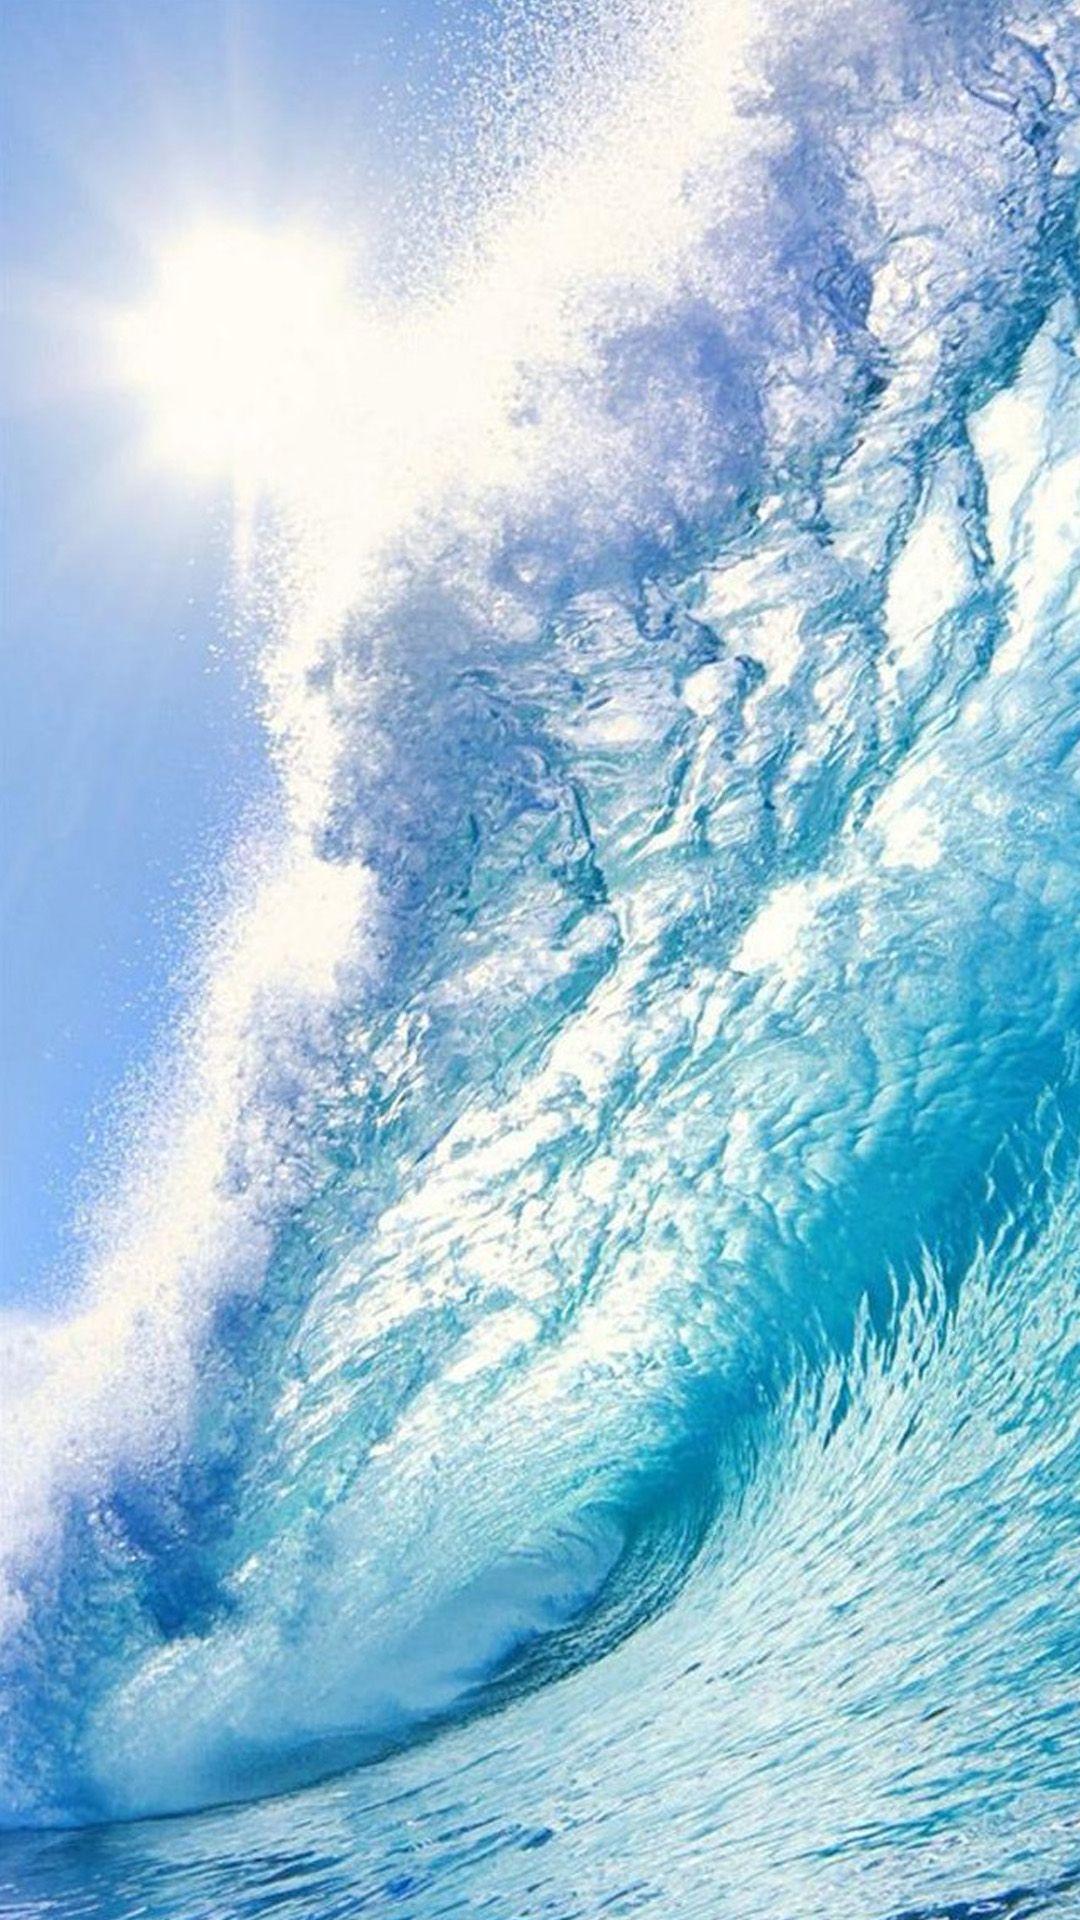 waves iphone wallpaper